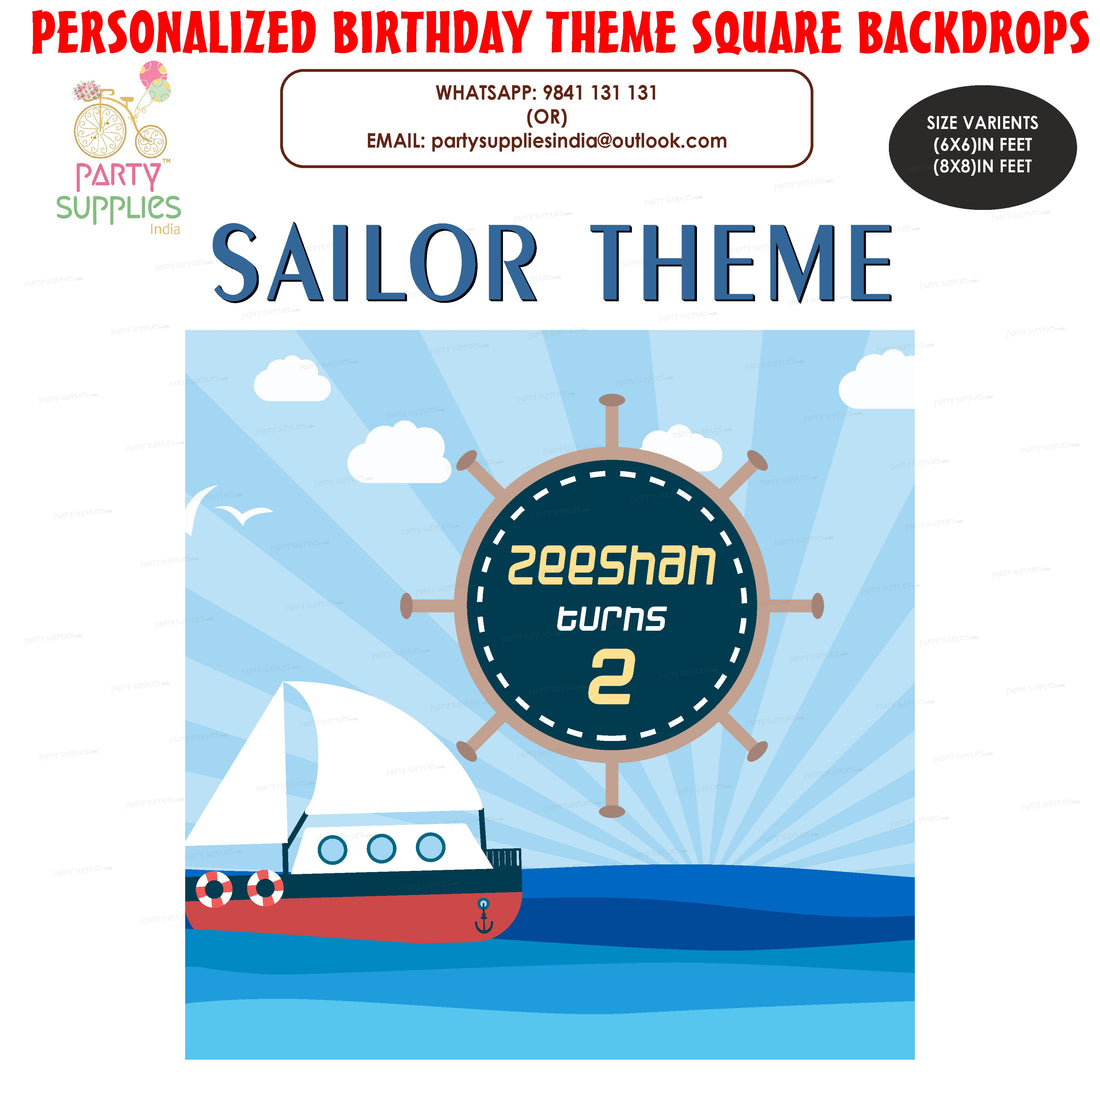 PSI Sailor Theme Personalized Square Backdrop